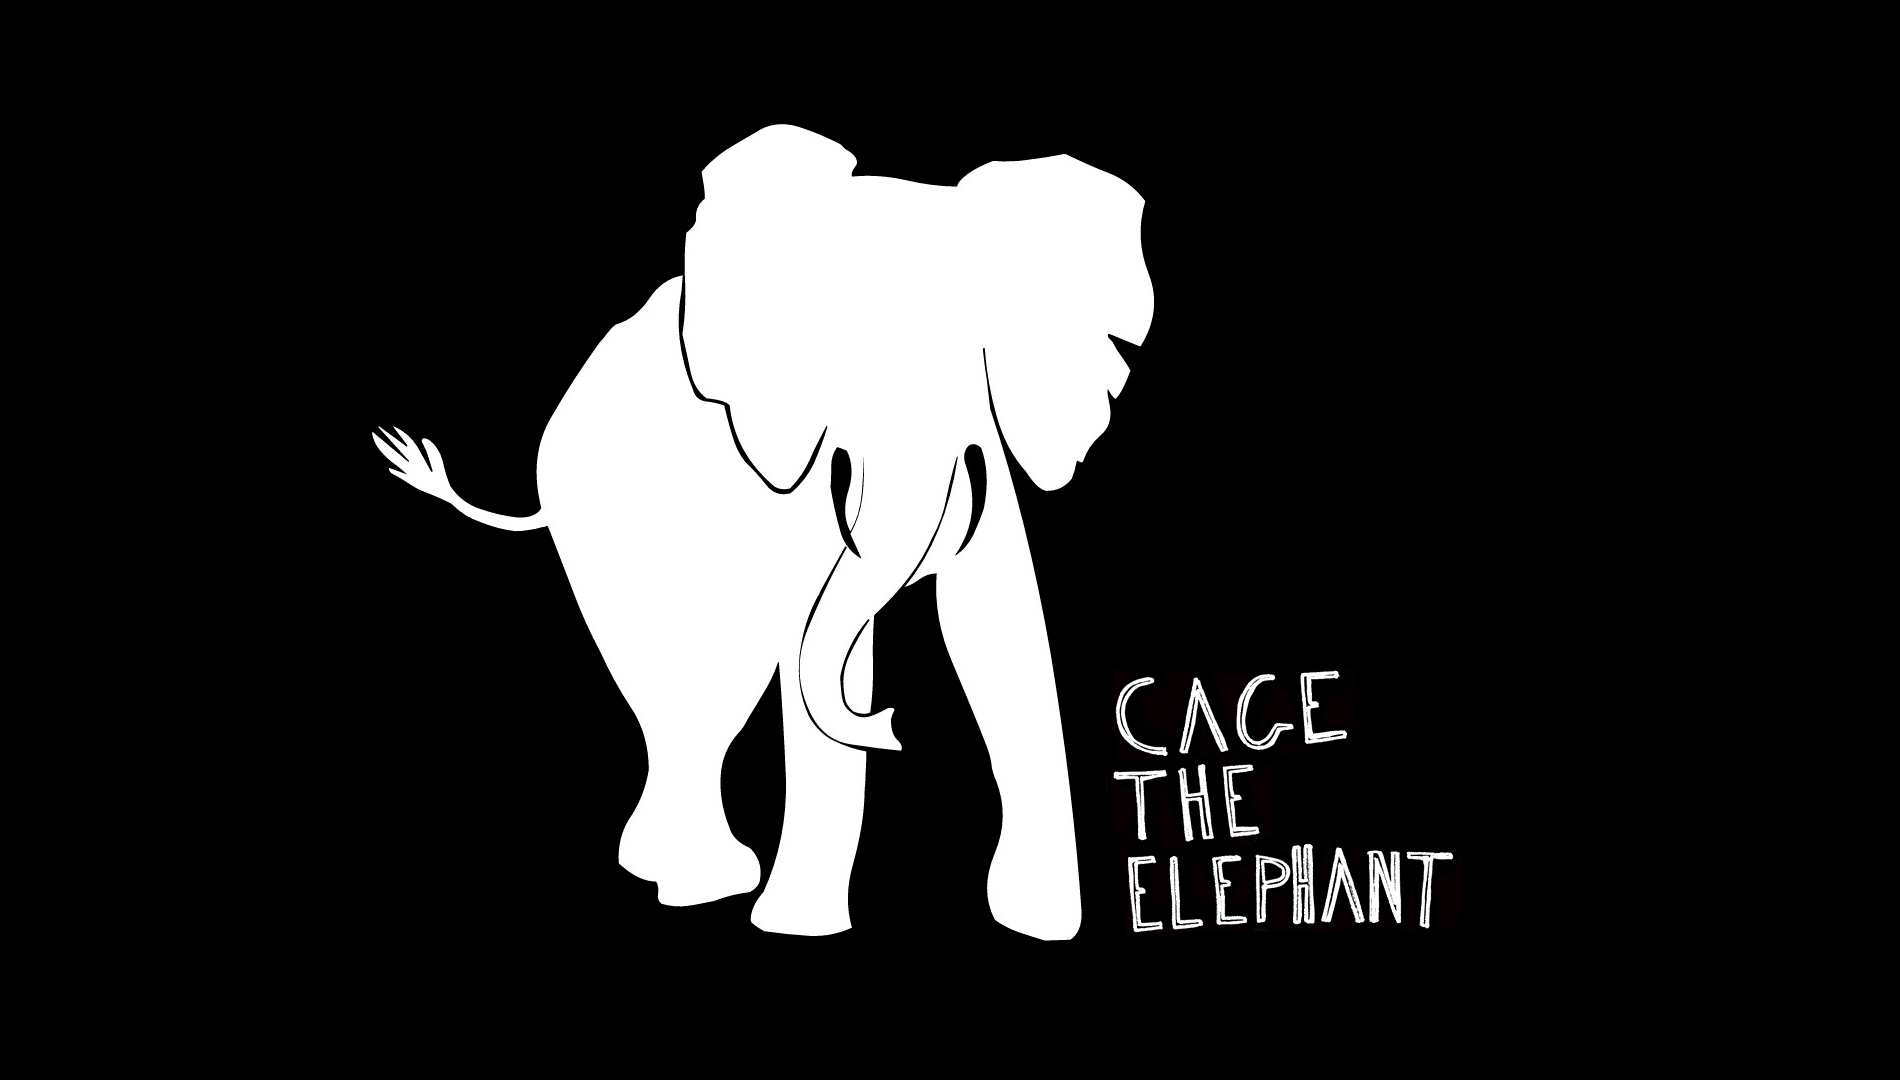 Cage the elephant elephant